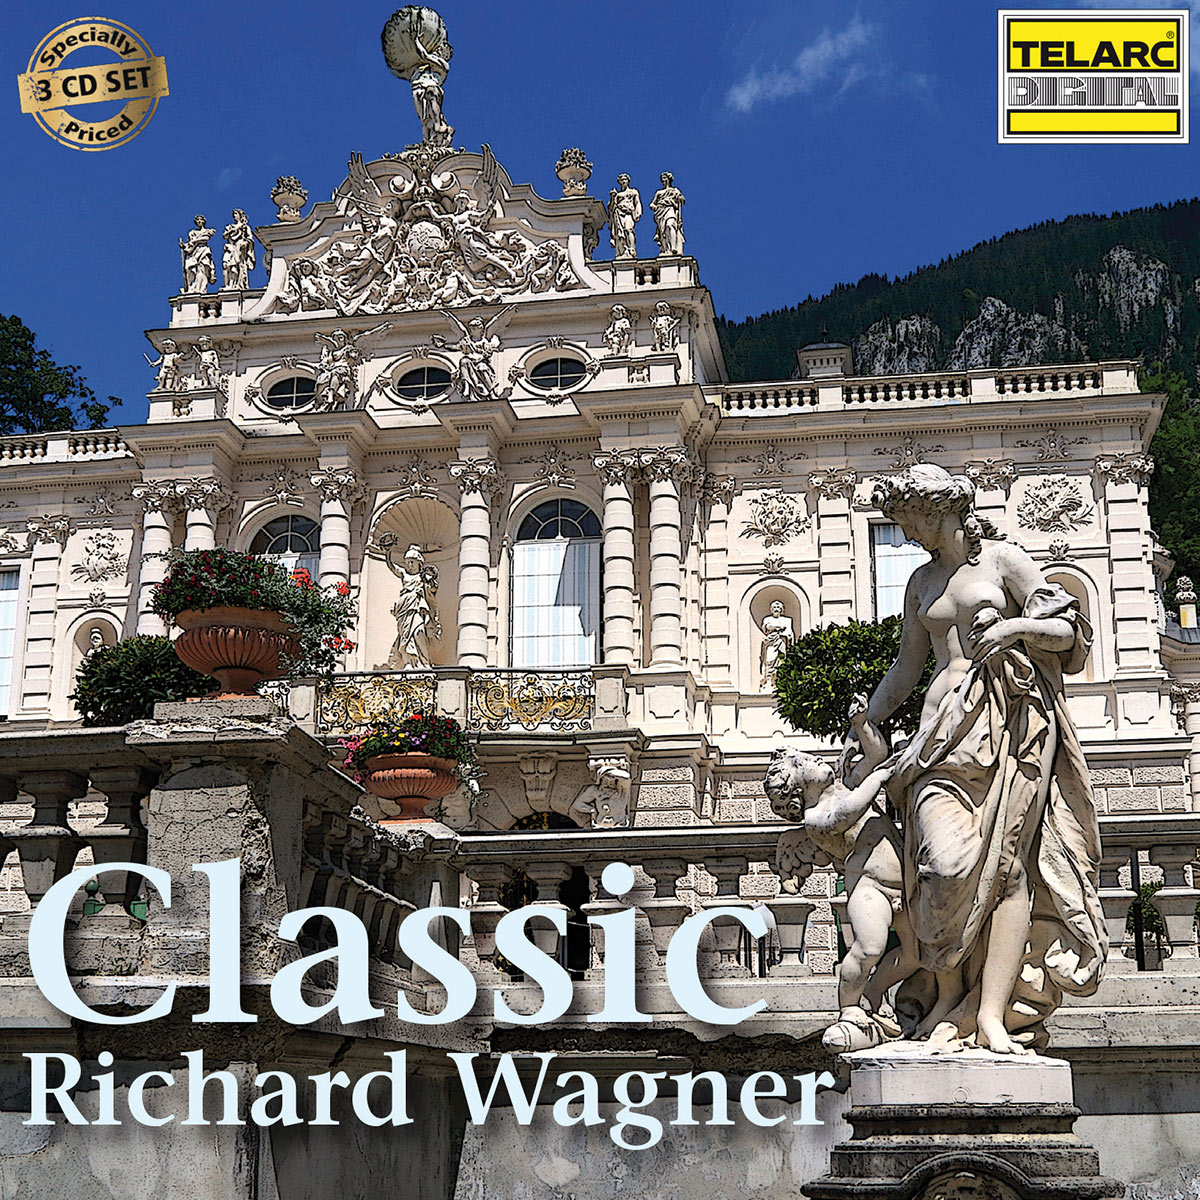 Classic Richard Wagner